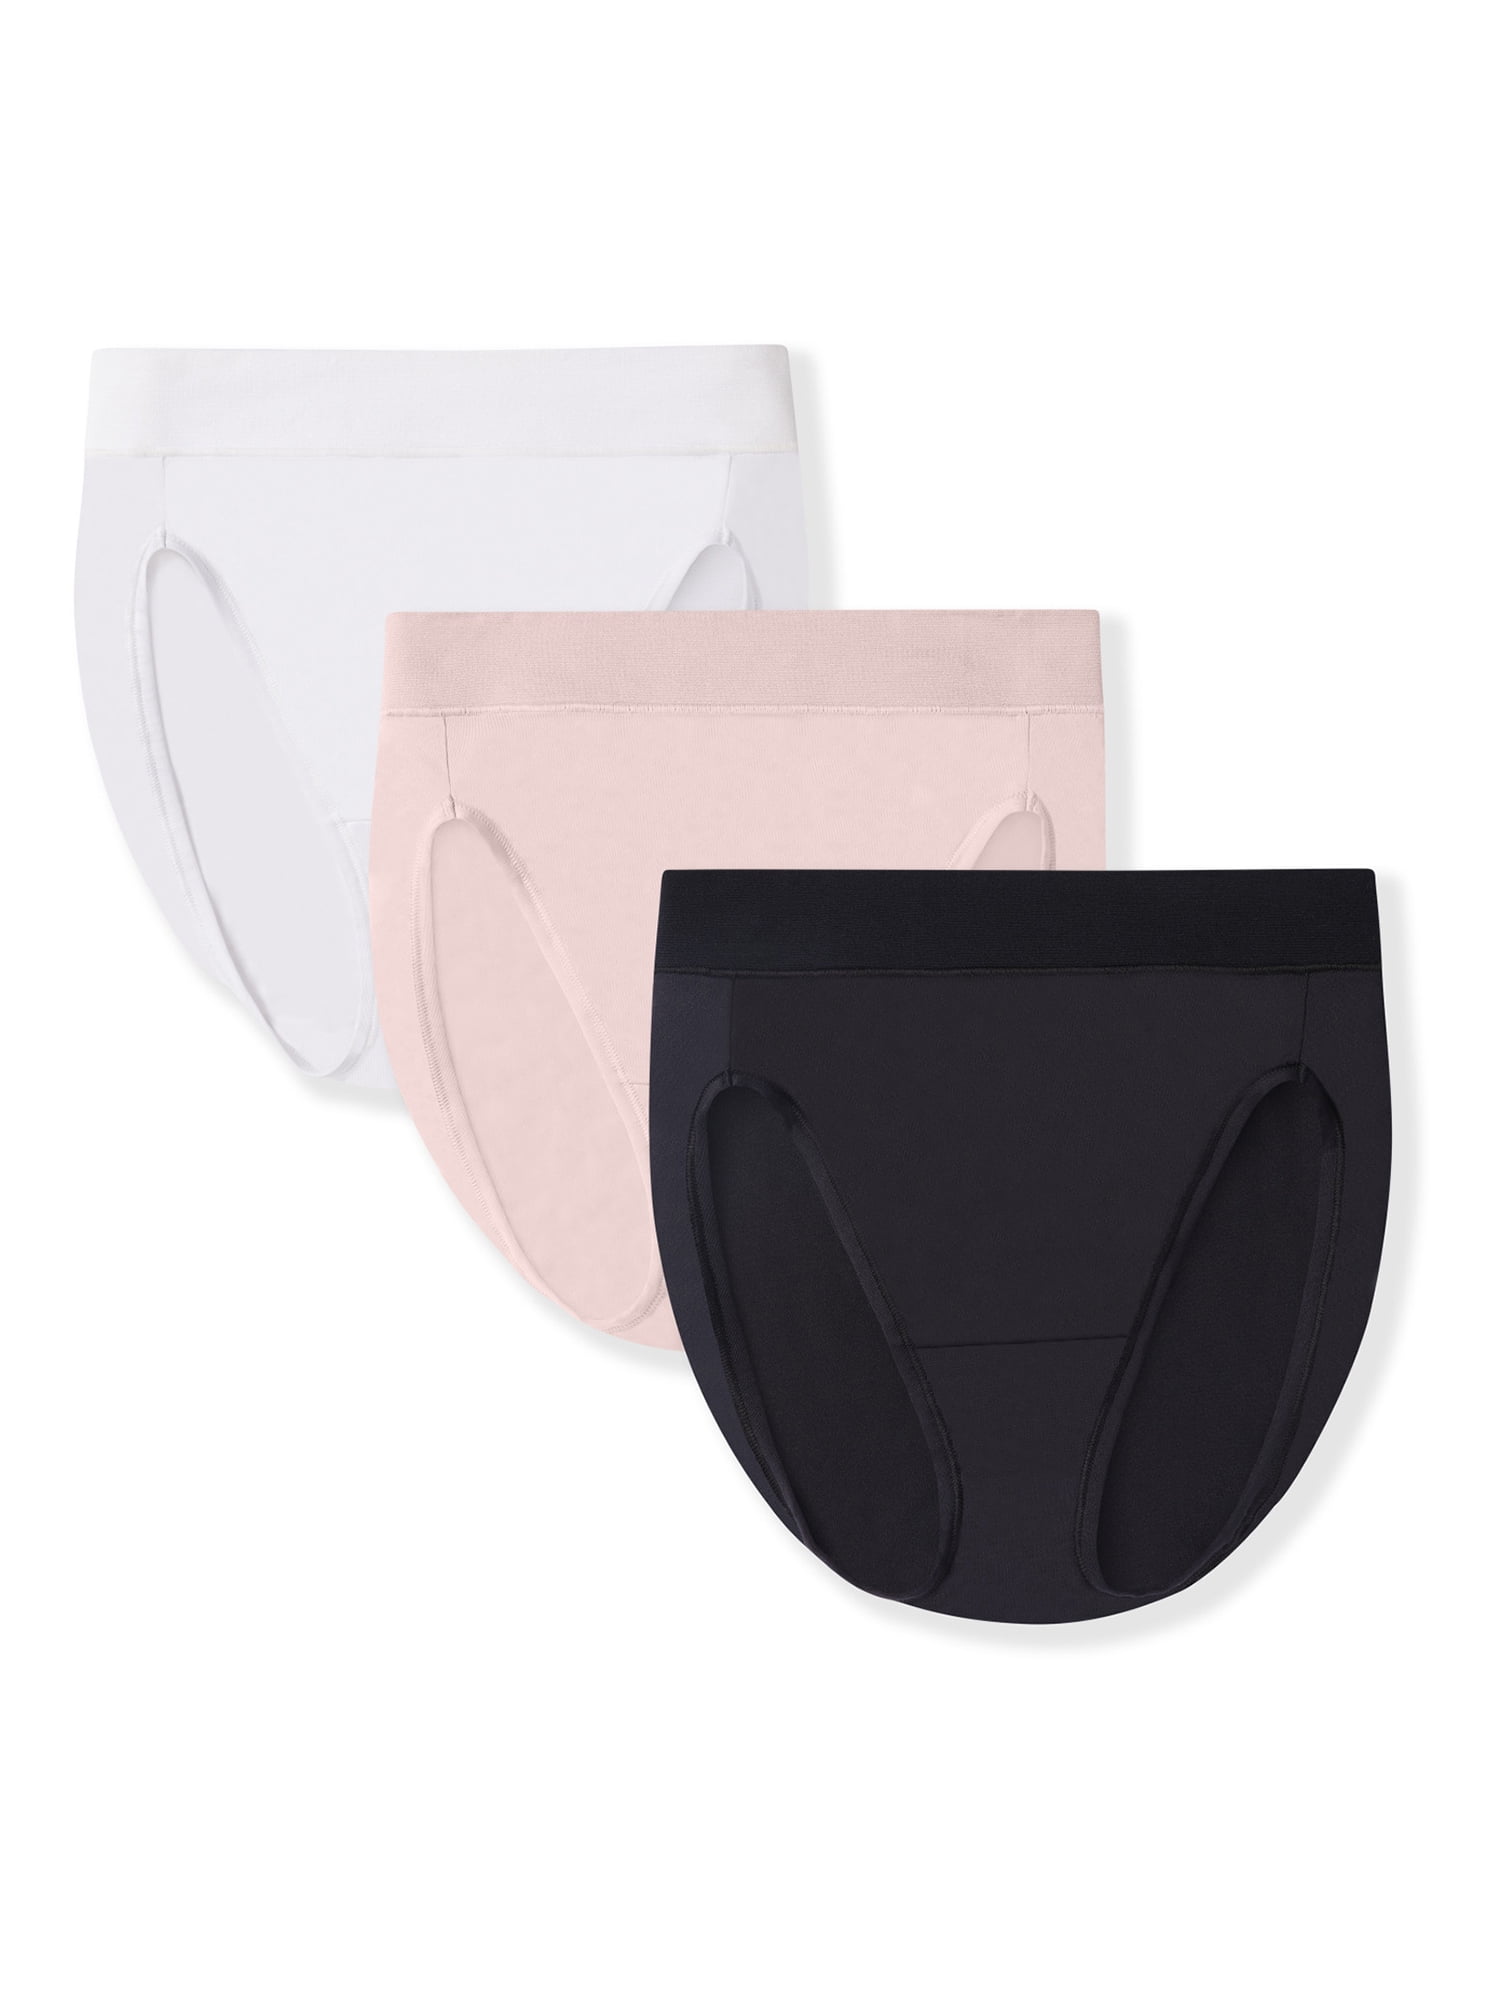 Vanity Fair Radiant Collection Women's 360 Comfort Hi-Cut Brief Underwear,  3 Pack 